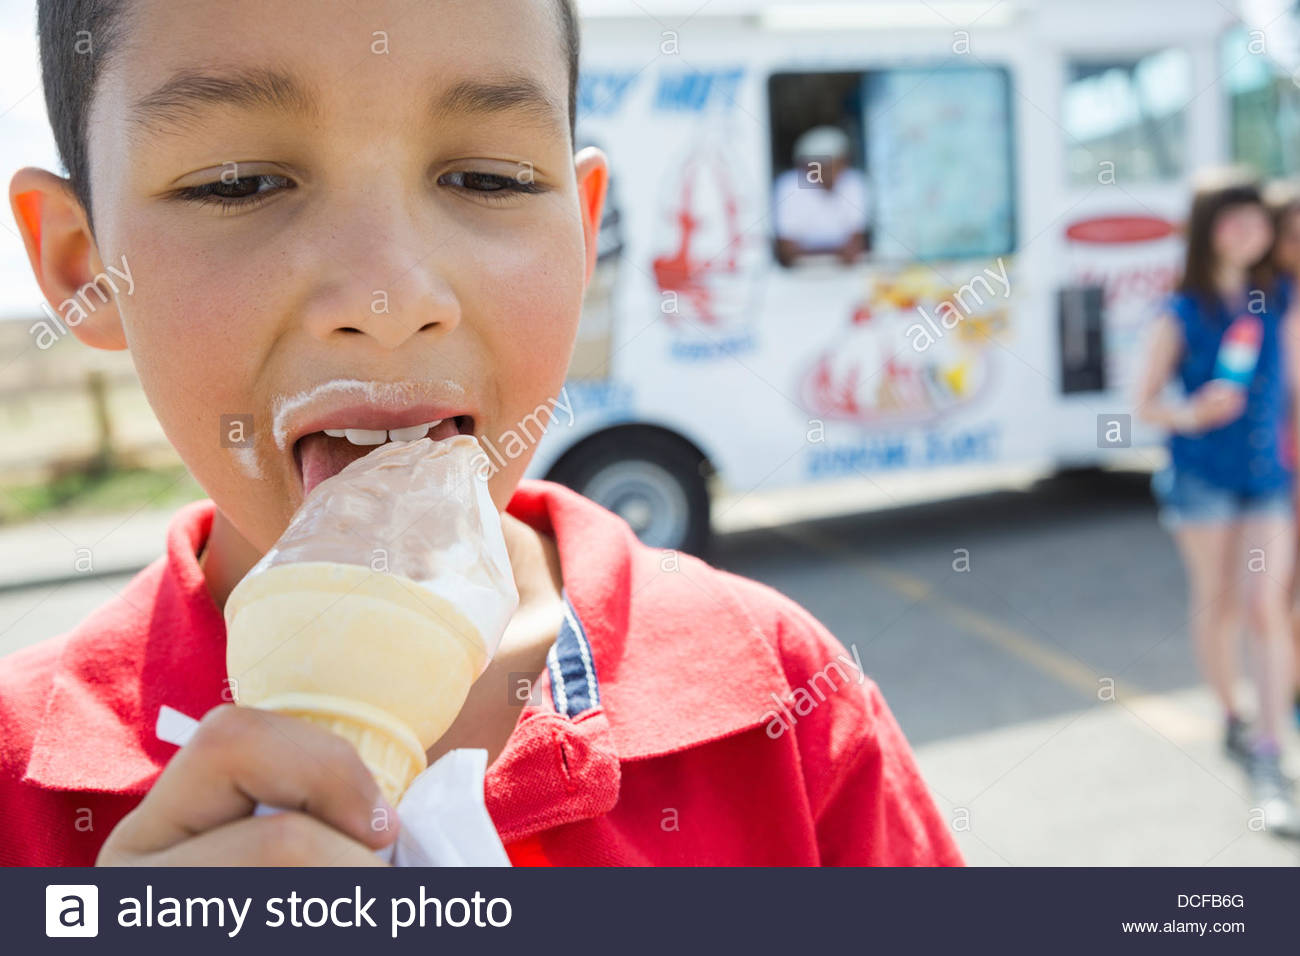 Close-up boy eating ice cream cone Stock Photo